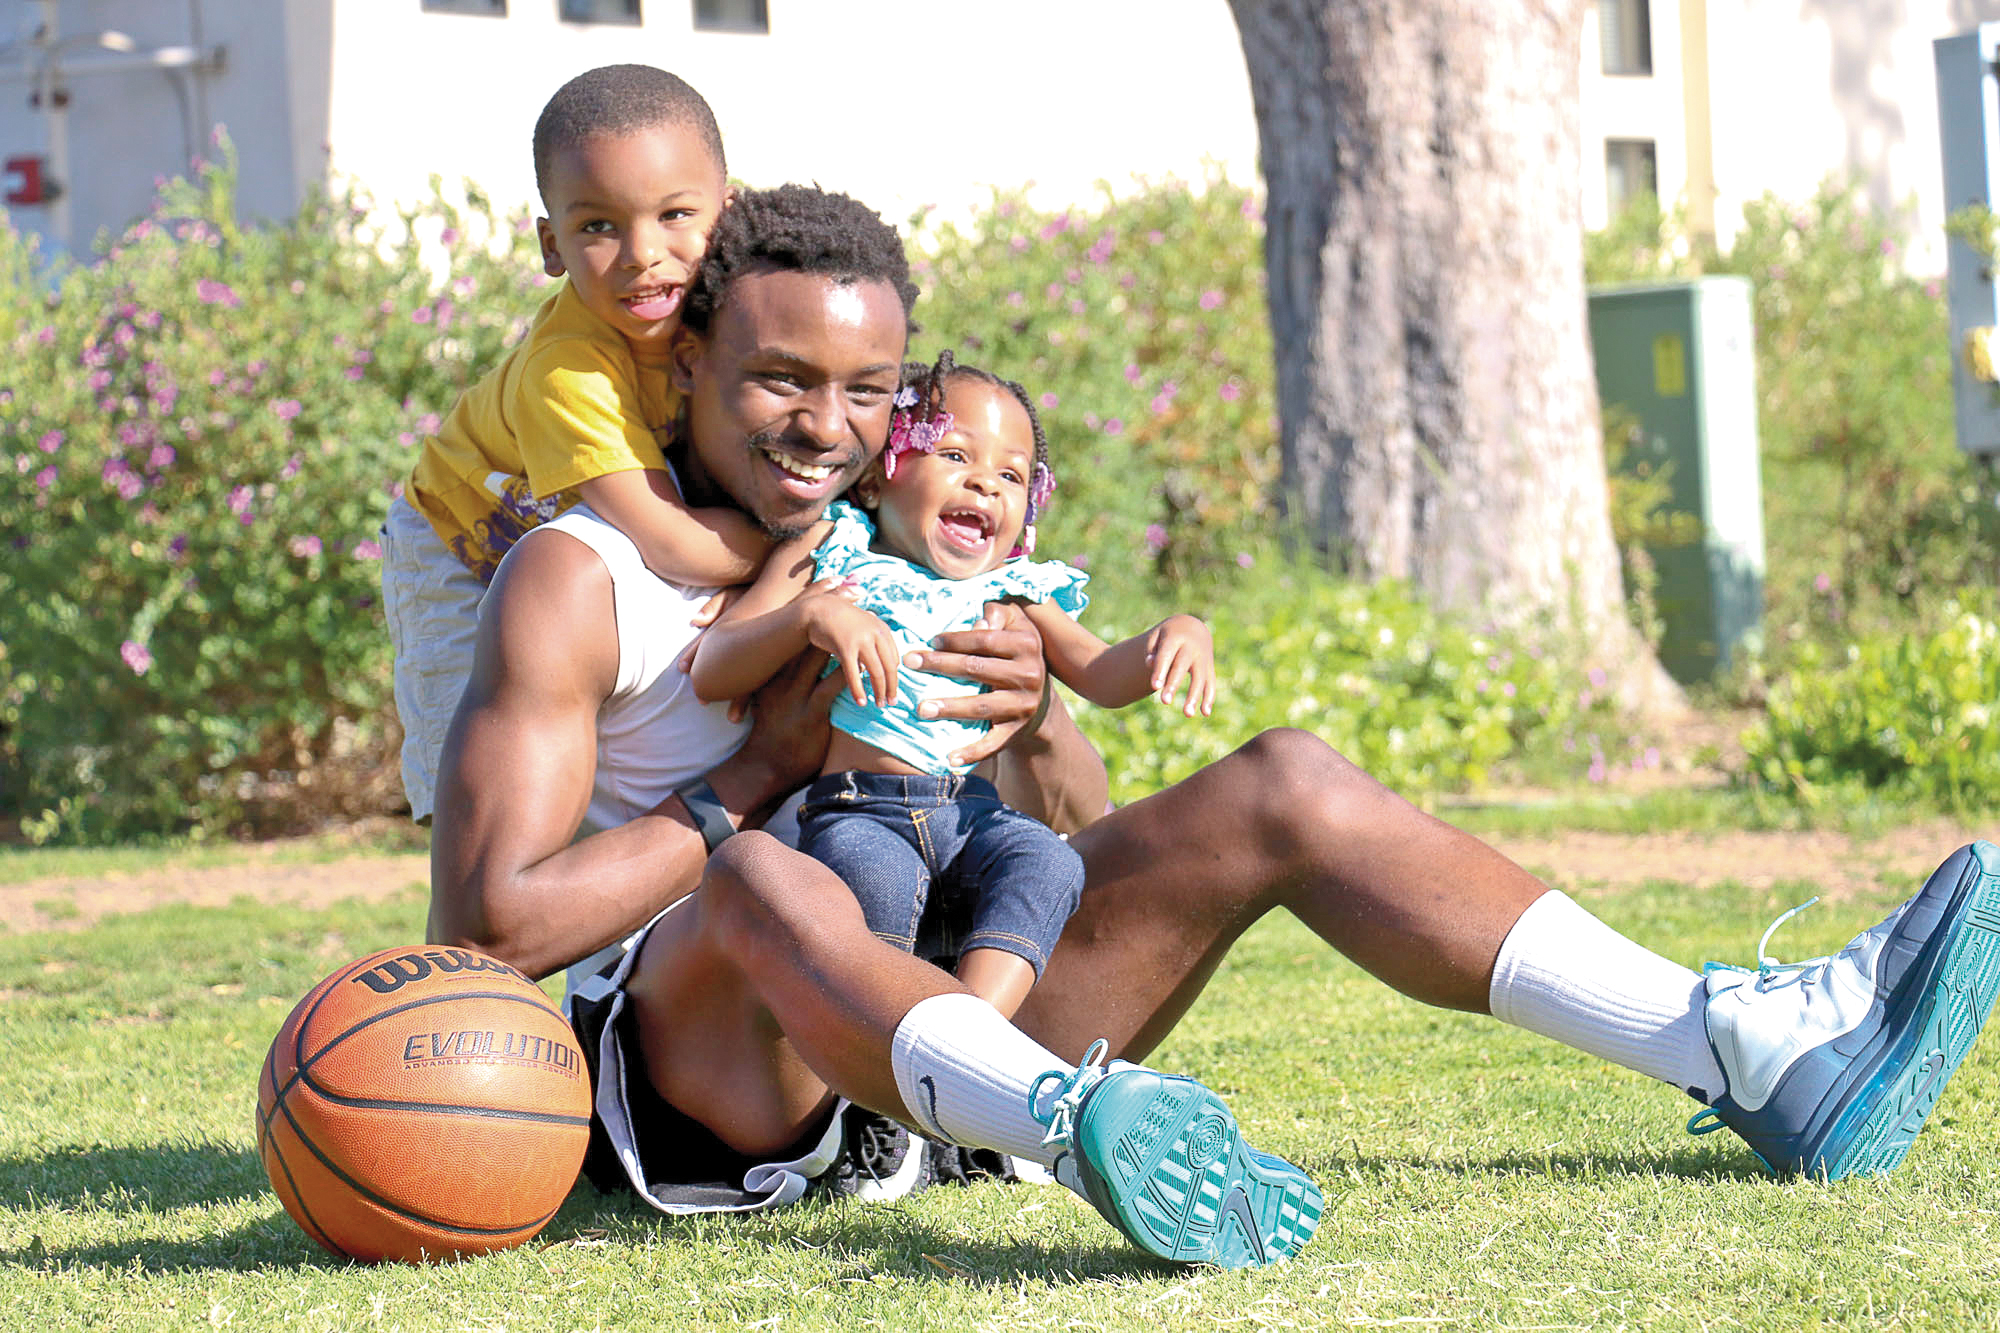 Student athlete juggles academics, basketball and raising two kids